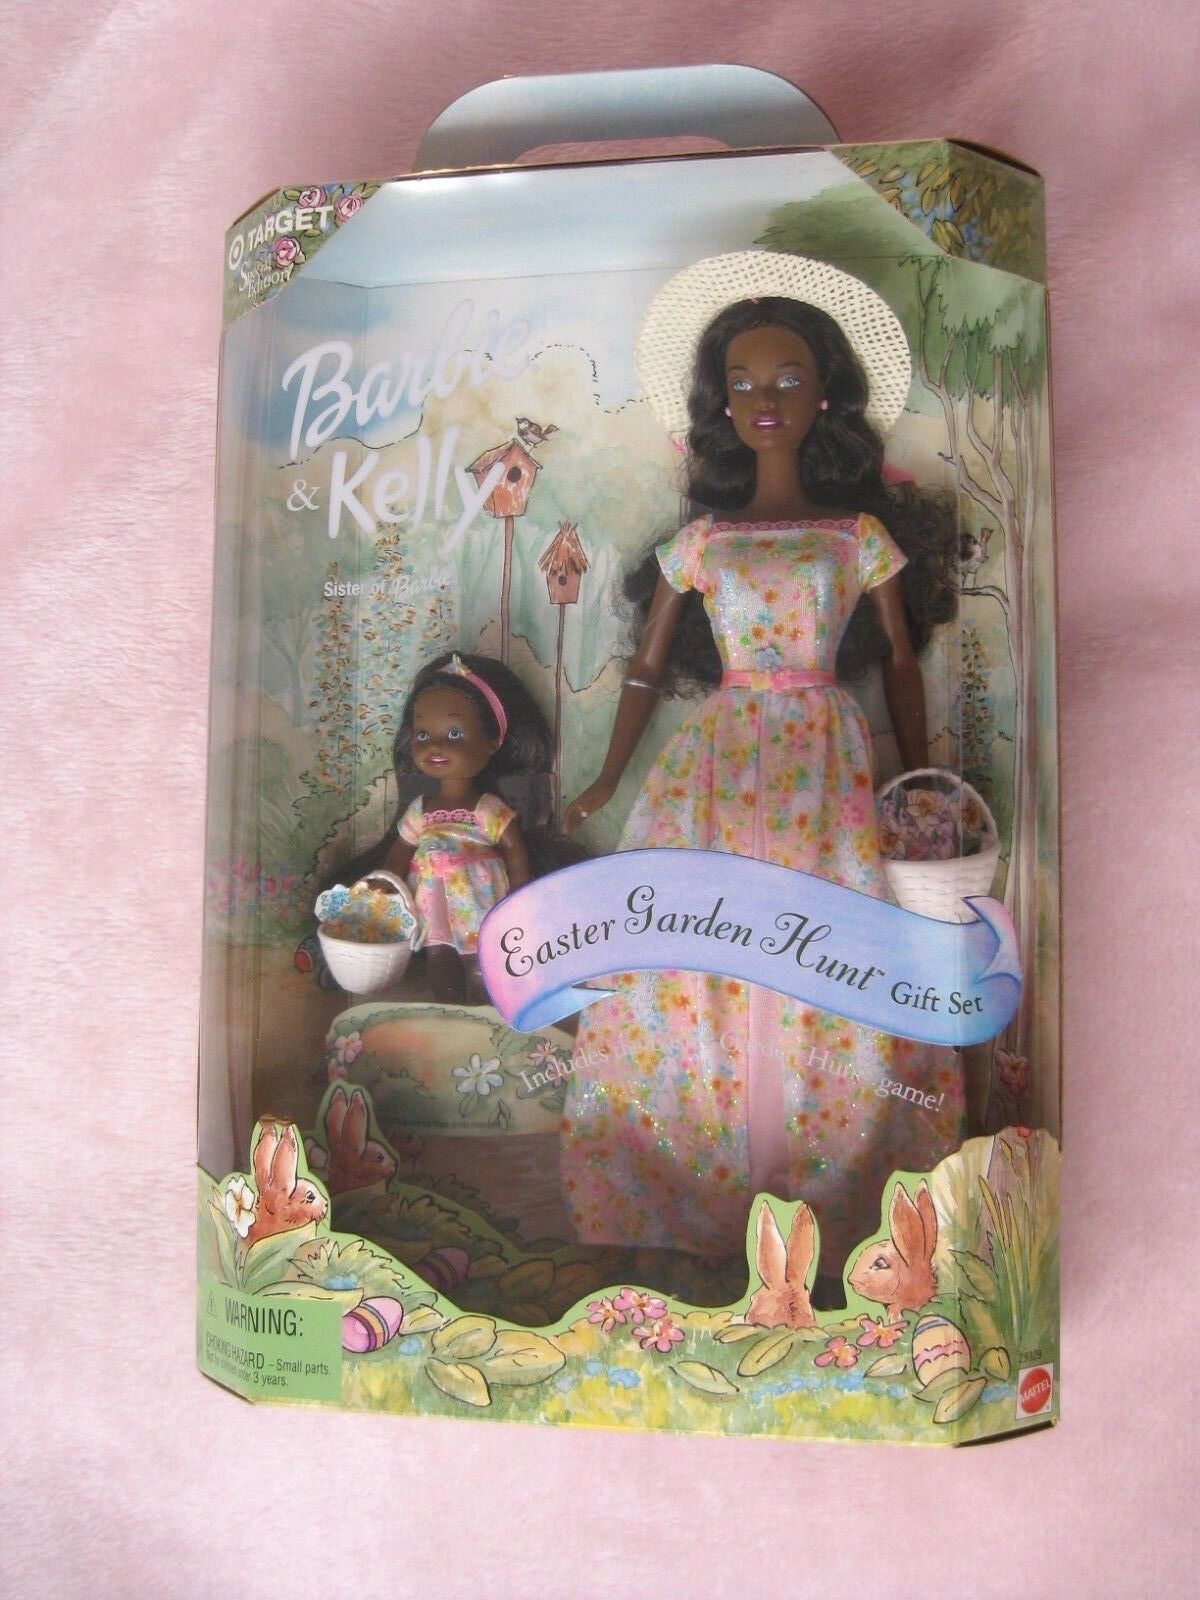 Barbie & Kelly A/a Dolls -  Easter Garden Hunt Gift Set - Target Special Ed.